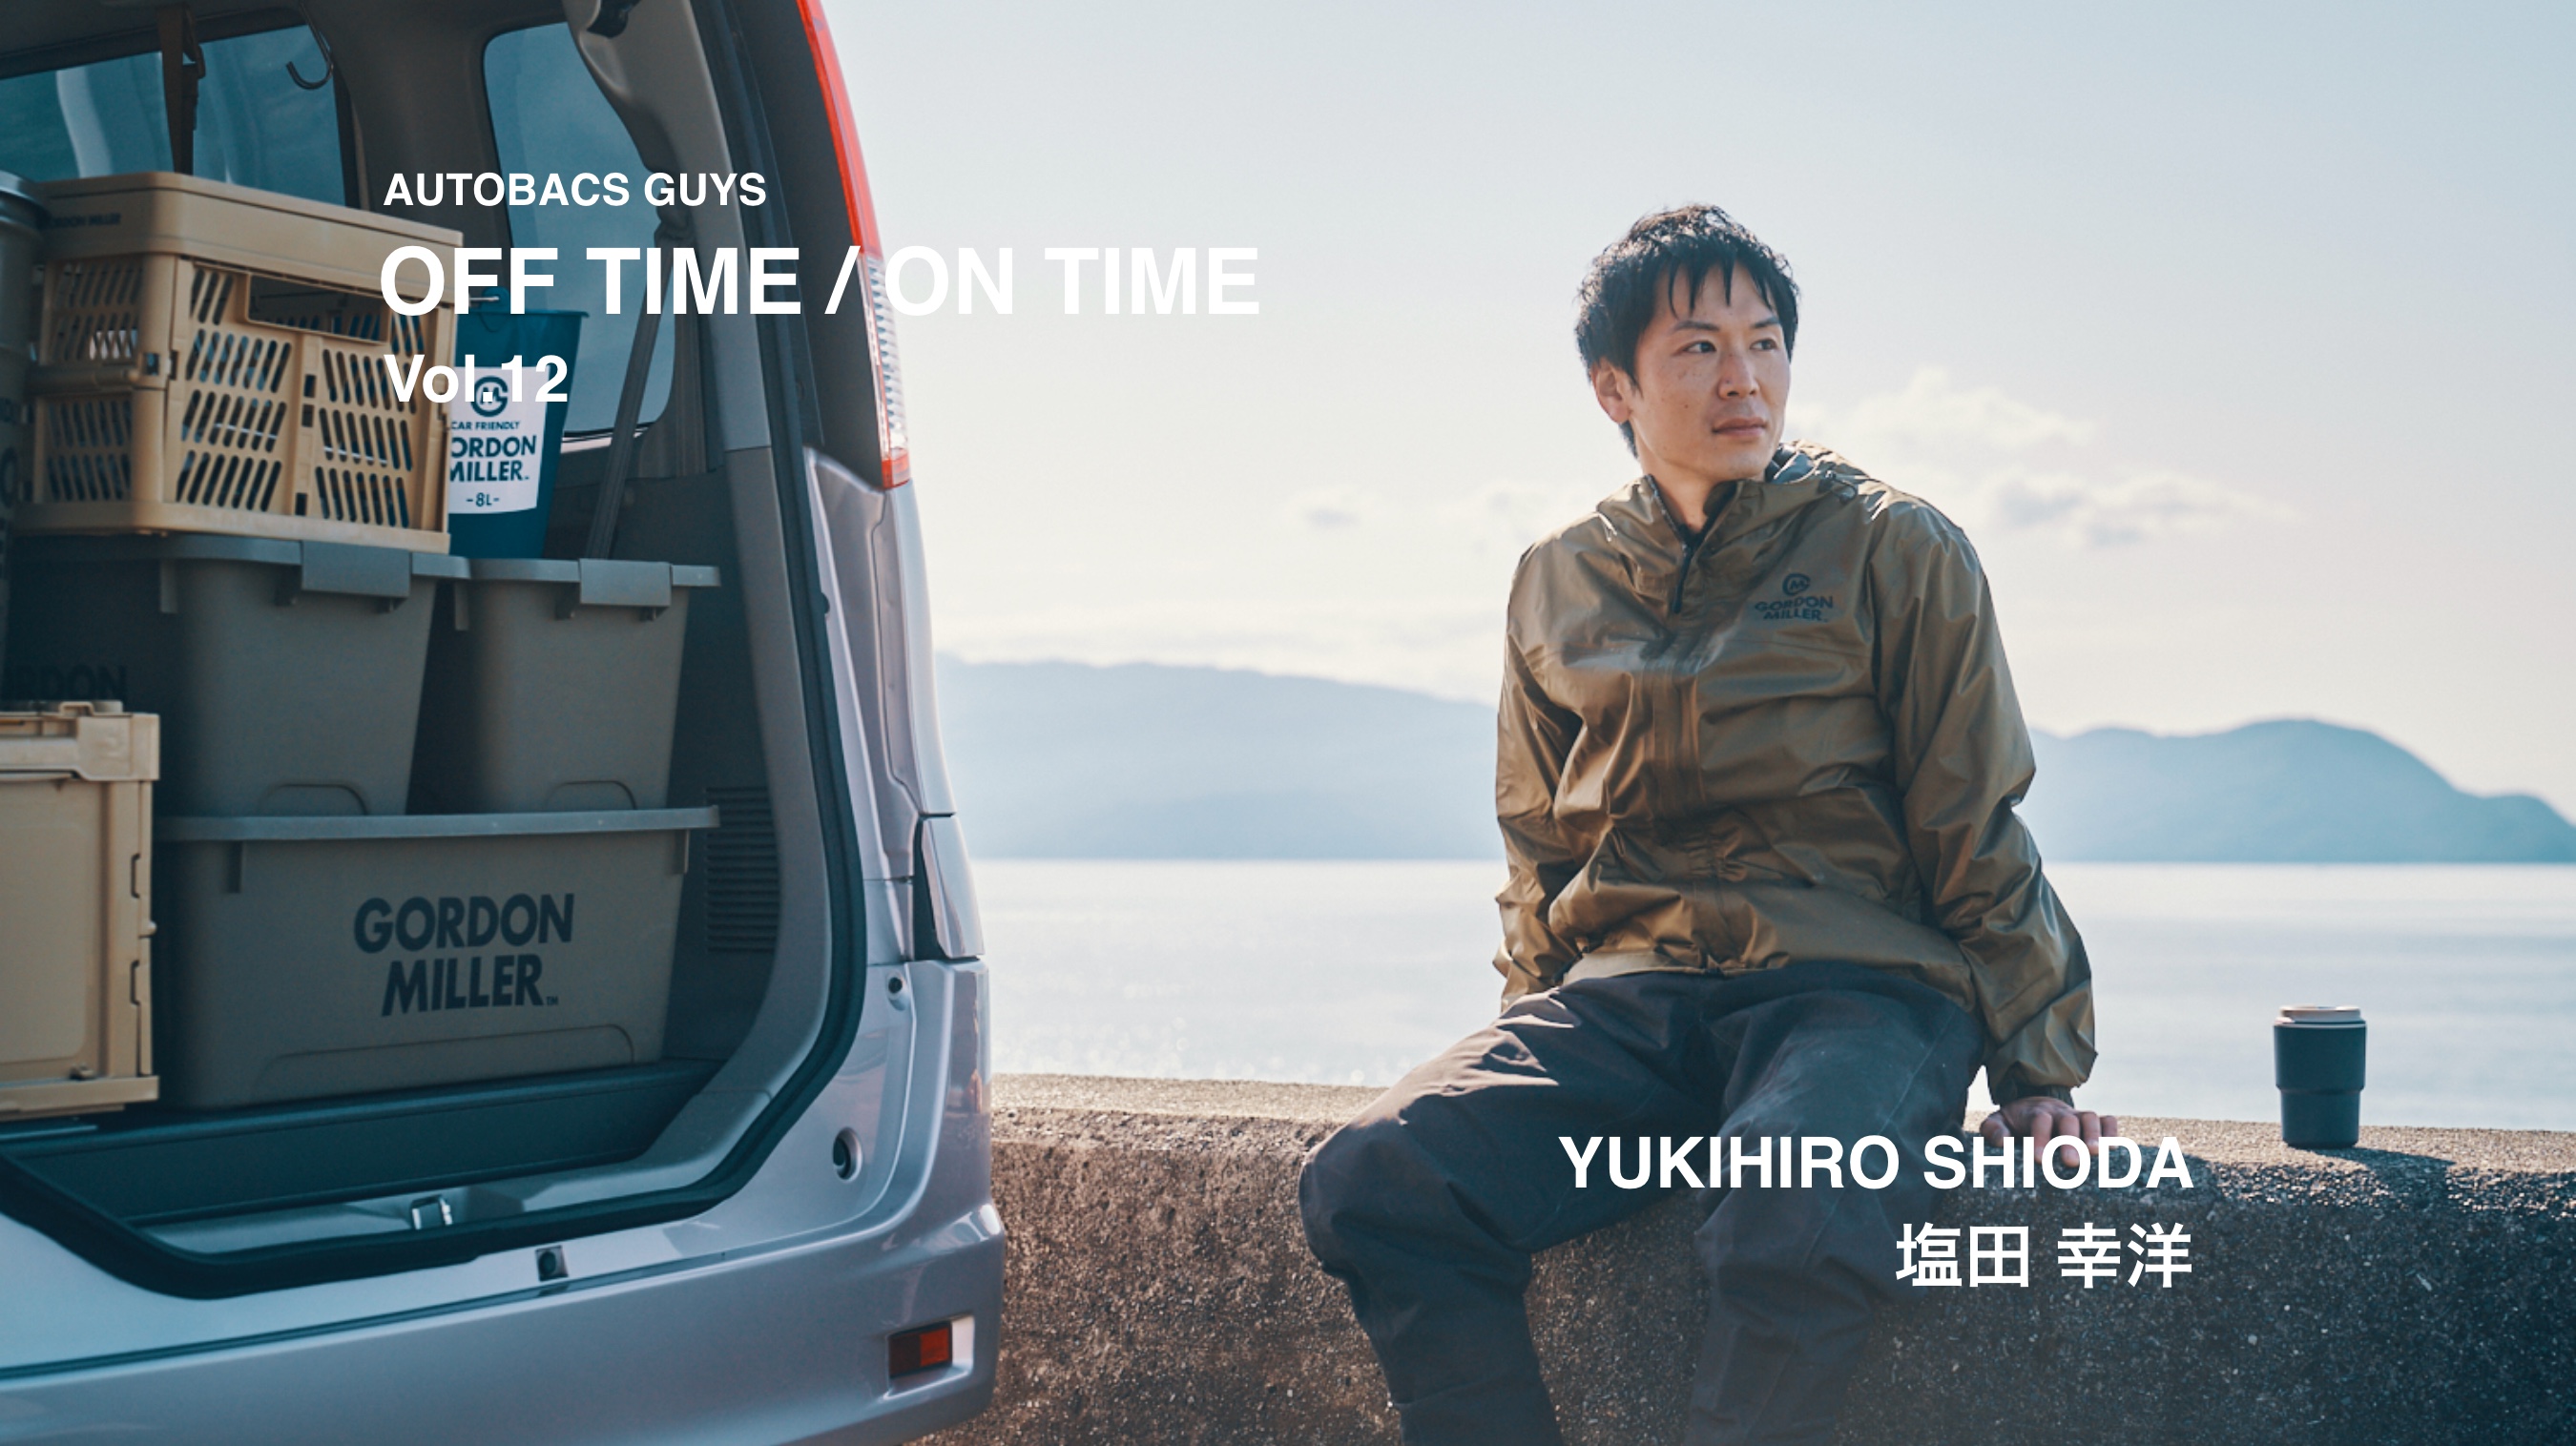 AUTOBACS GUYS OFF TIME / ON TIME オートバックスガイズの裏側　Vol.12 : 潮田 幸洋 YUKIHIRO SHIODA